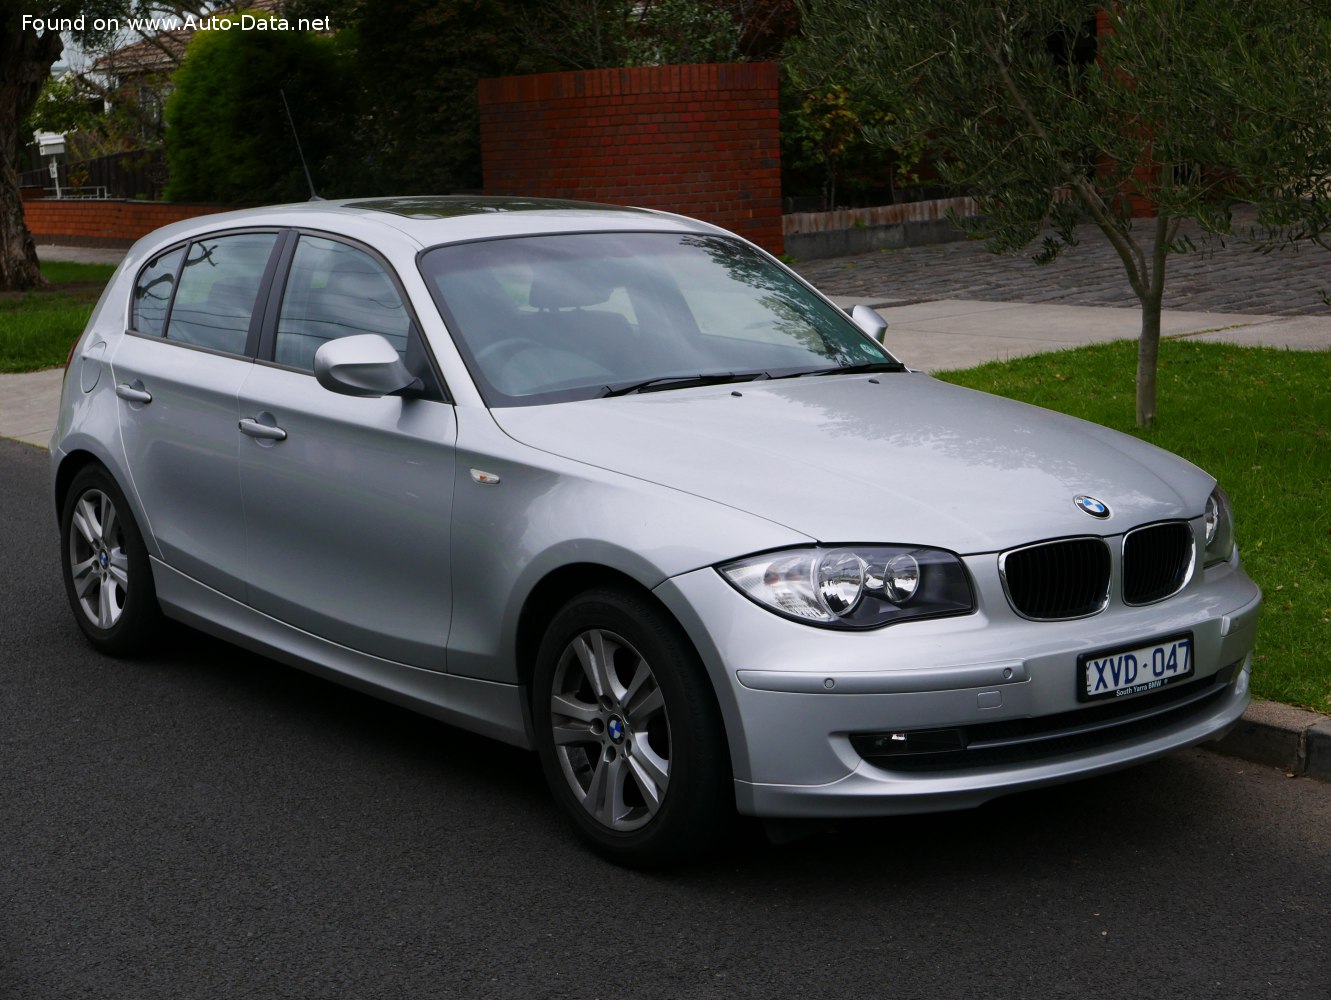 https://www.auto-data.net/images/f113/BMW-1-Series-Hatchback-5dr-E87-LCI-facelift-2007.jpg